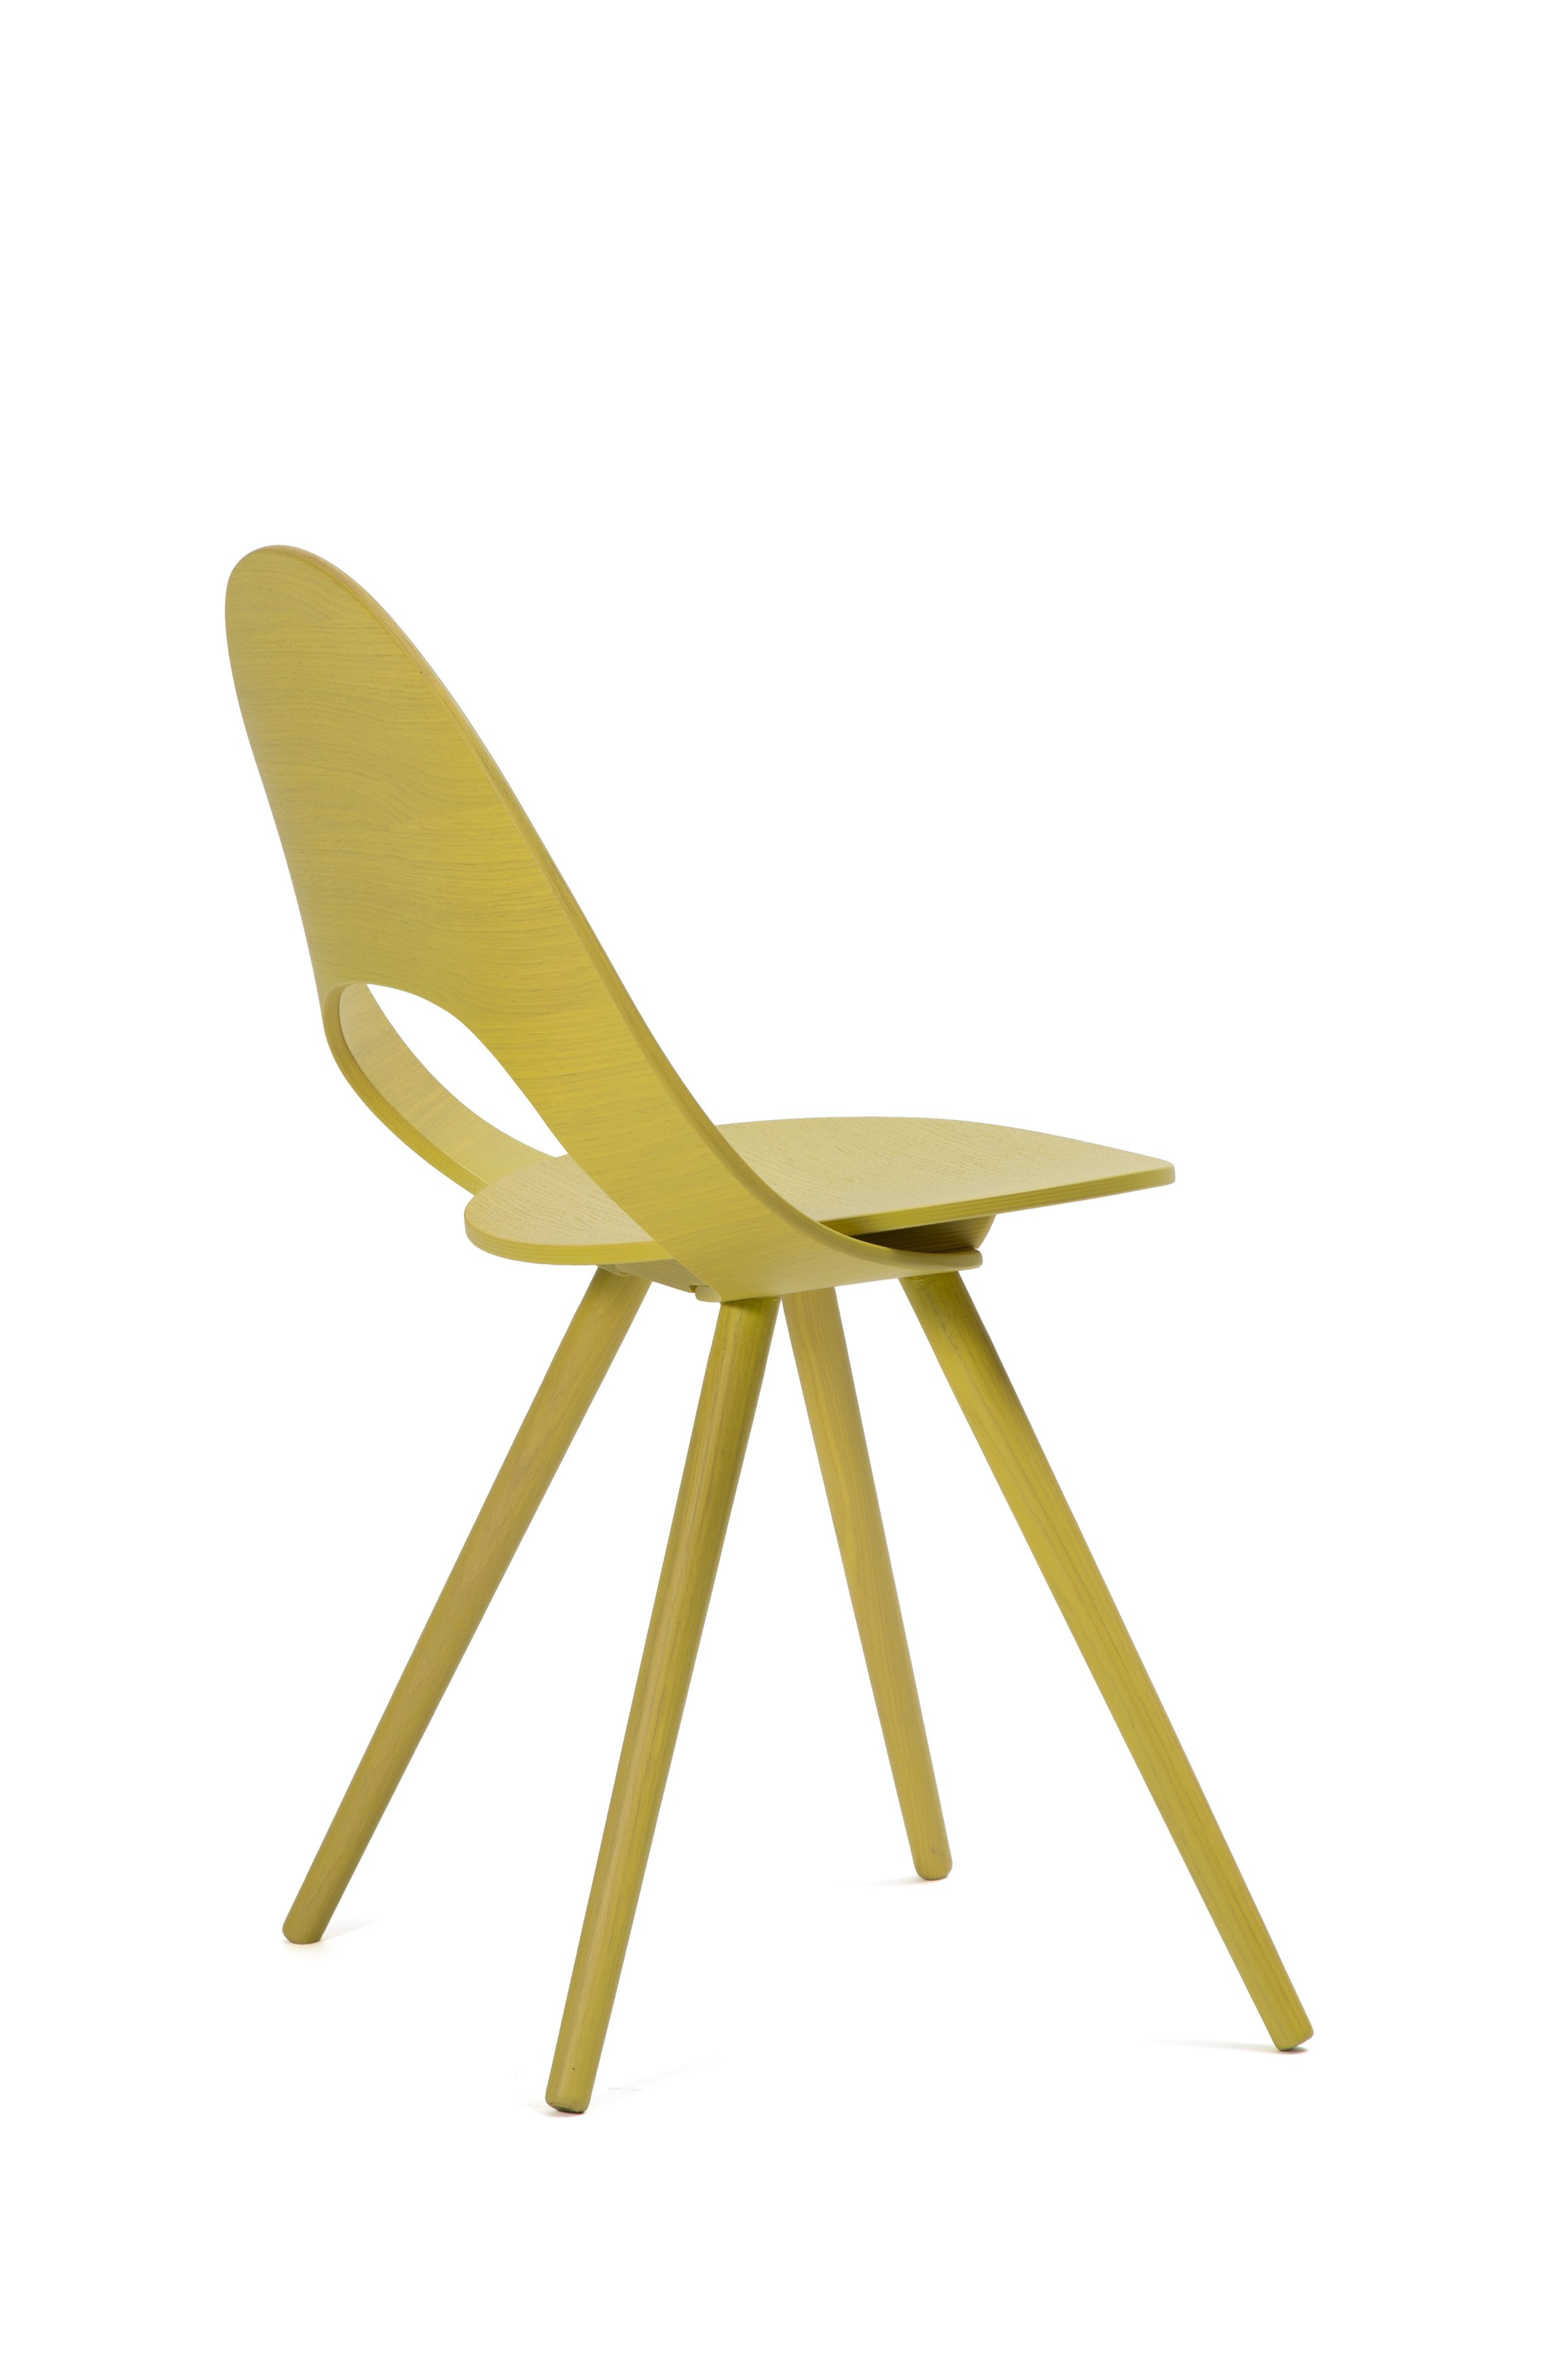 Ono Chair by Susanne Grønlund for Inno Interior Oy